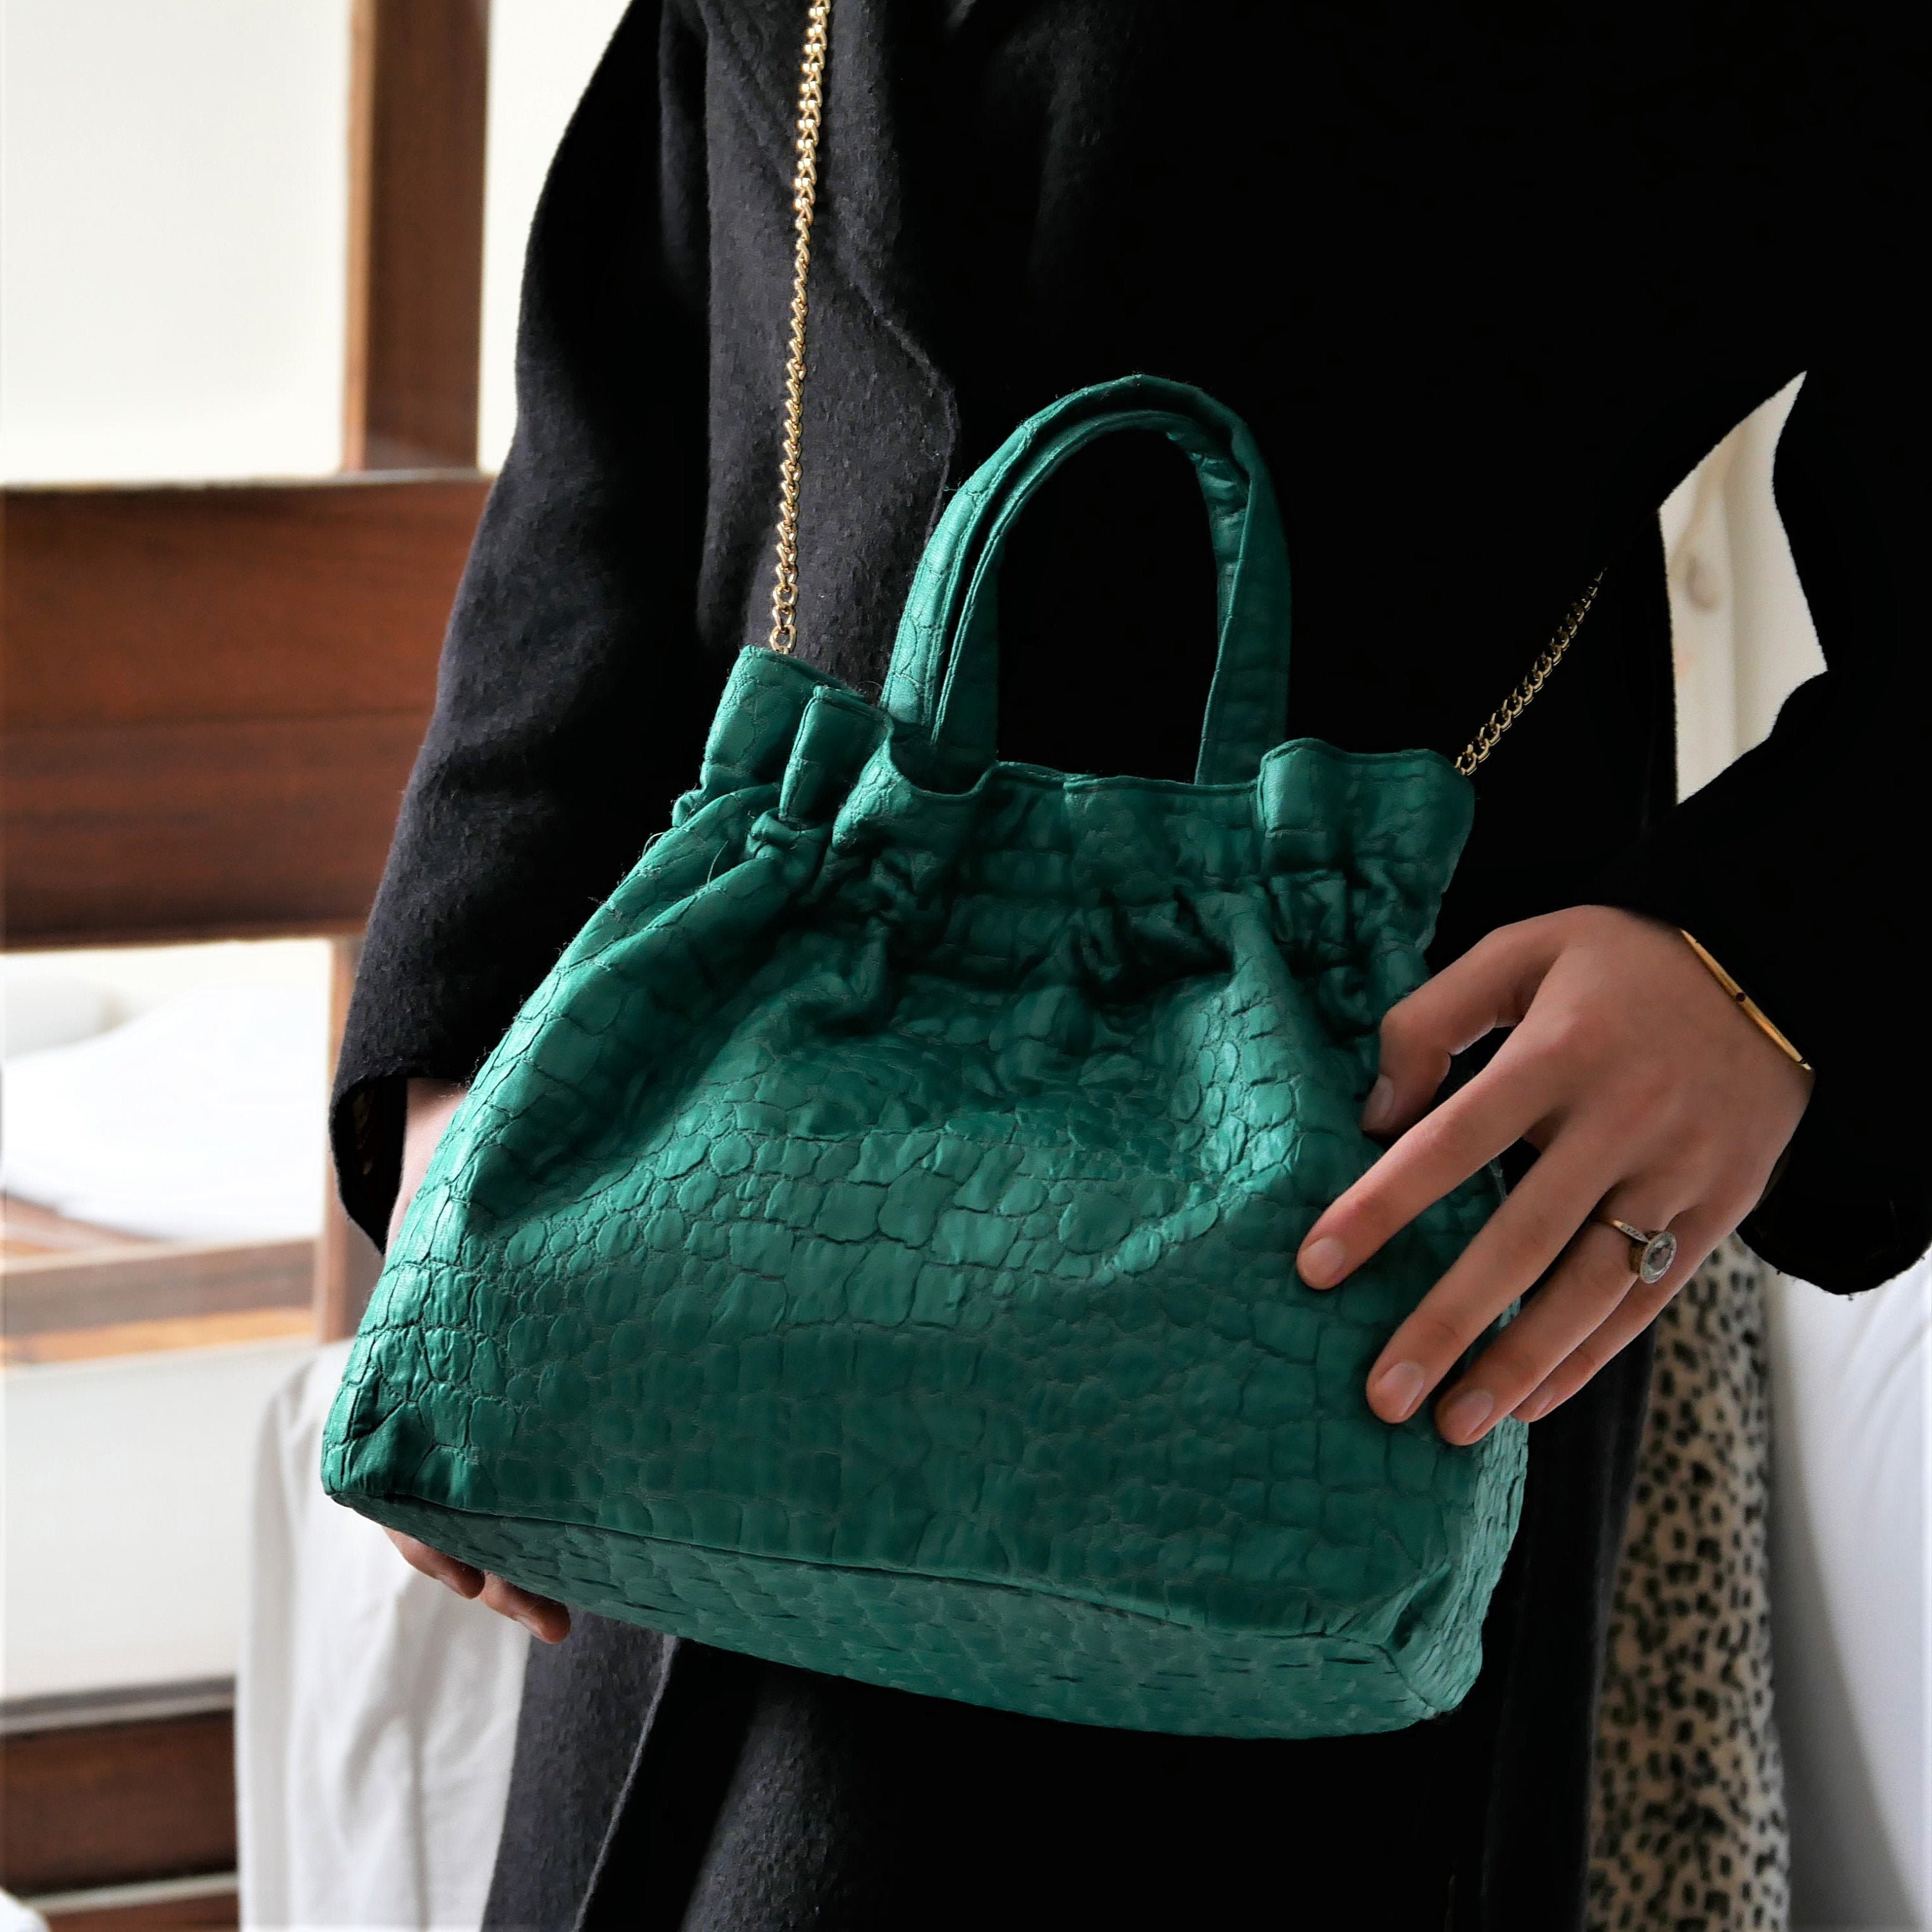 Buy Chanel Crocodile Bag Online In India -  India